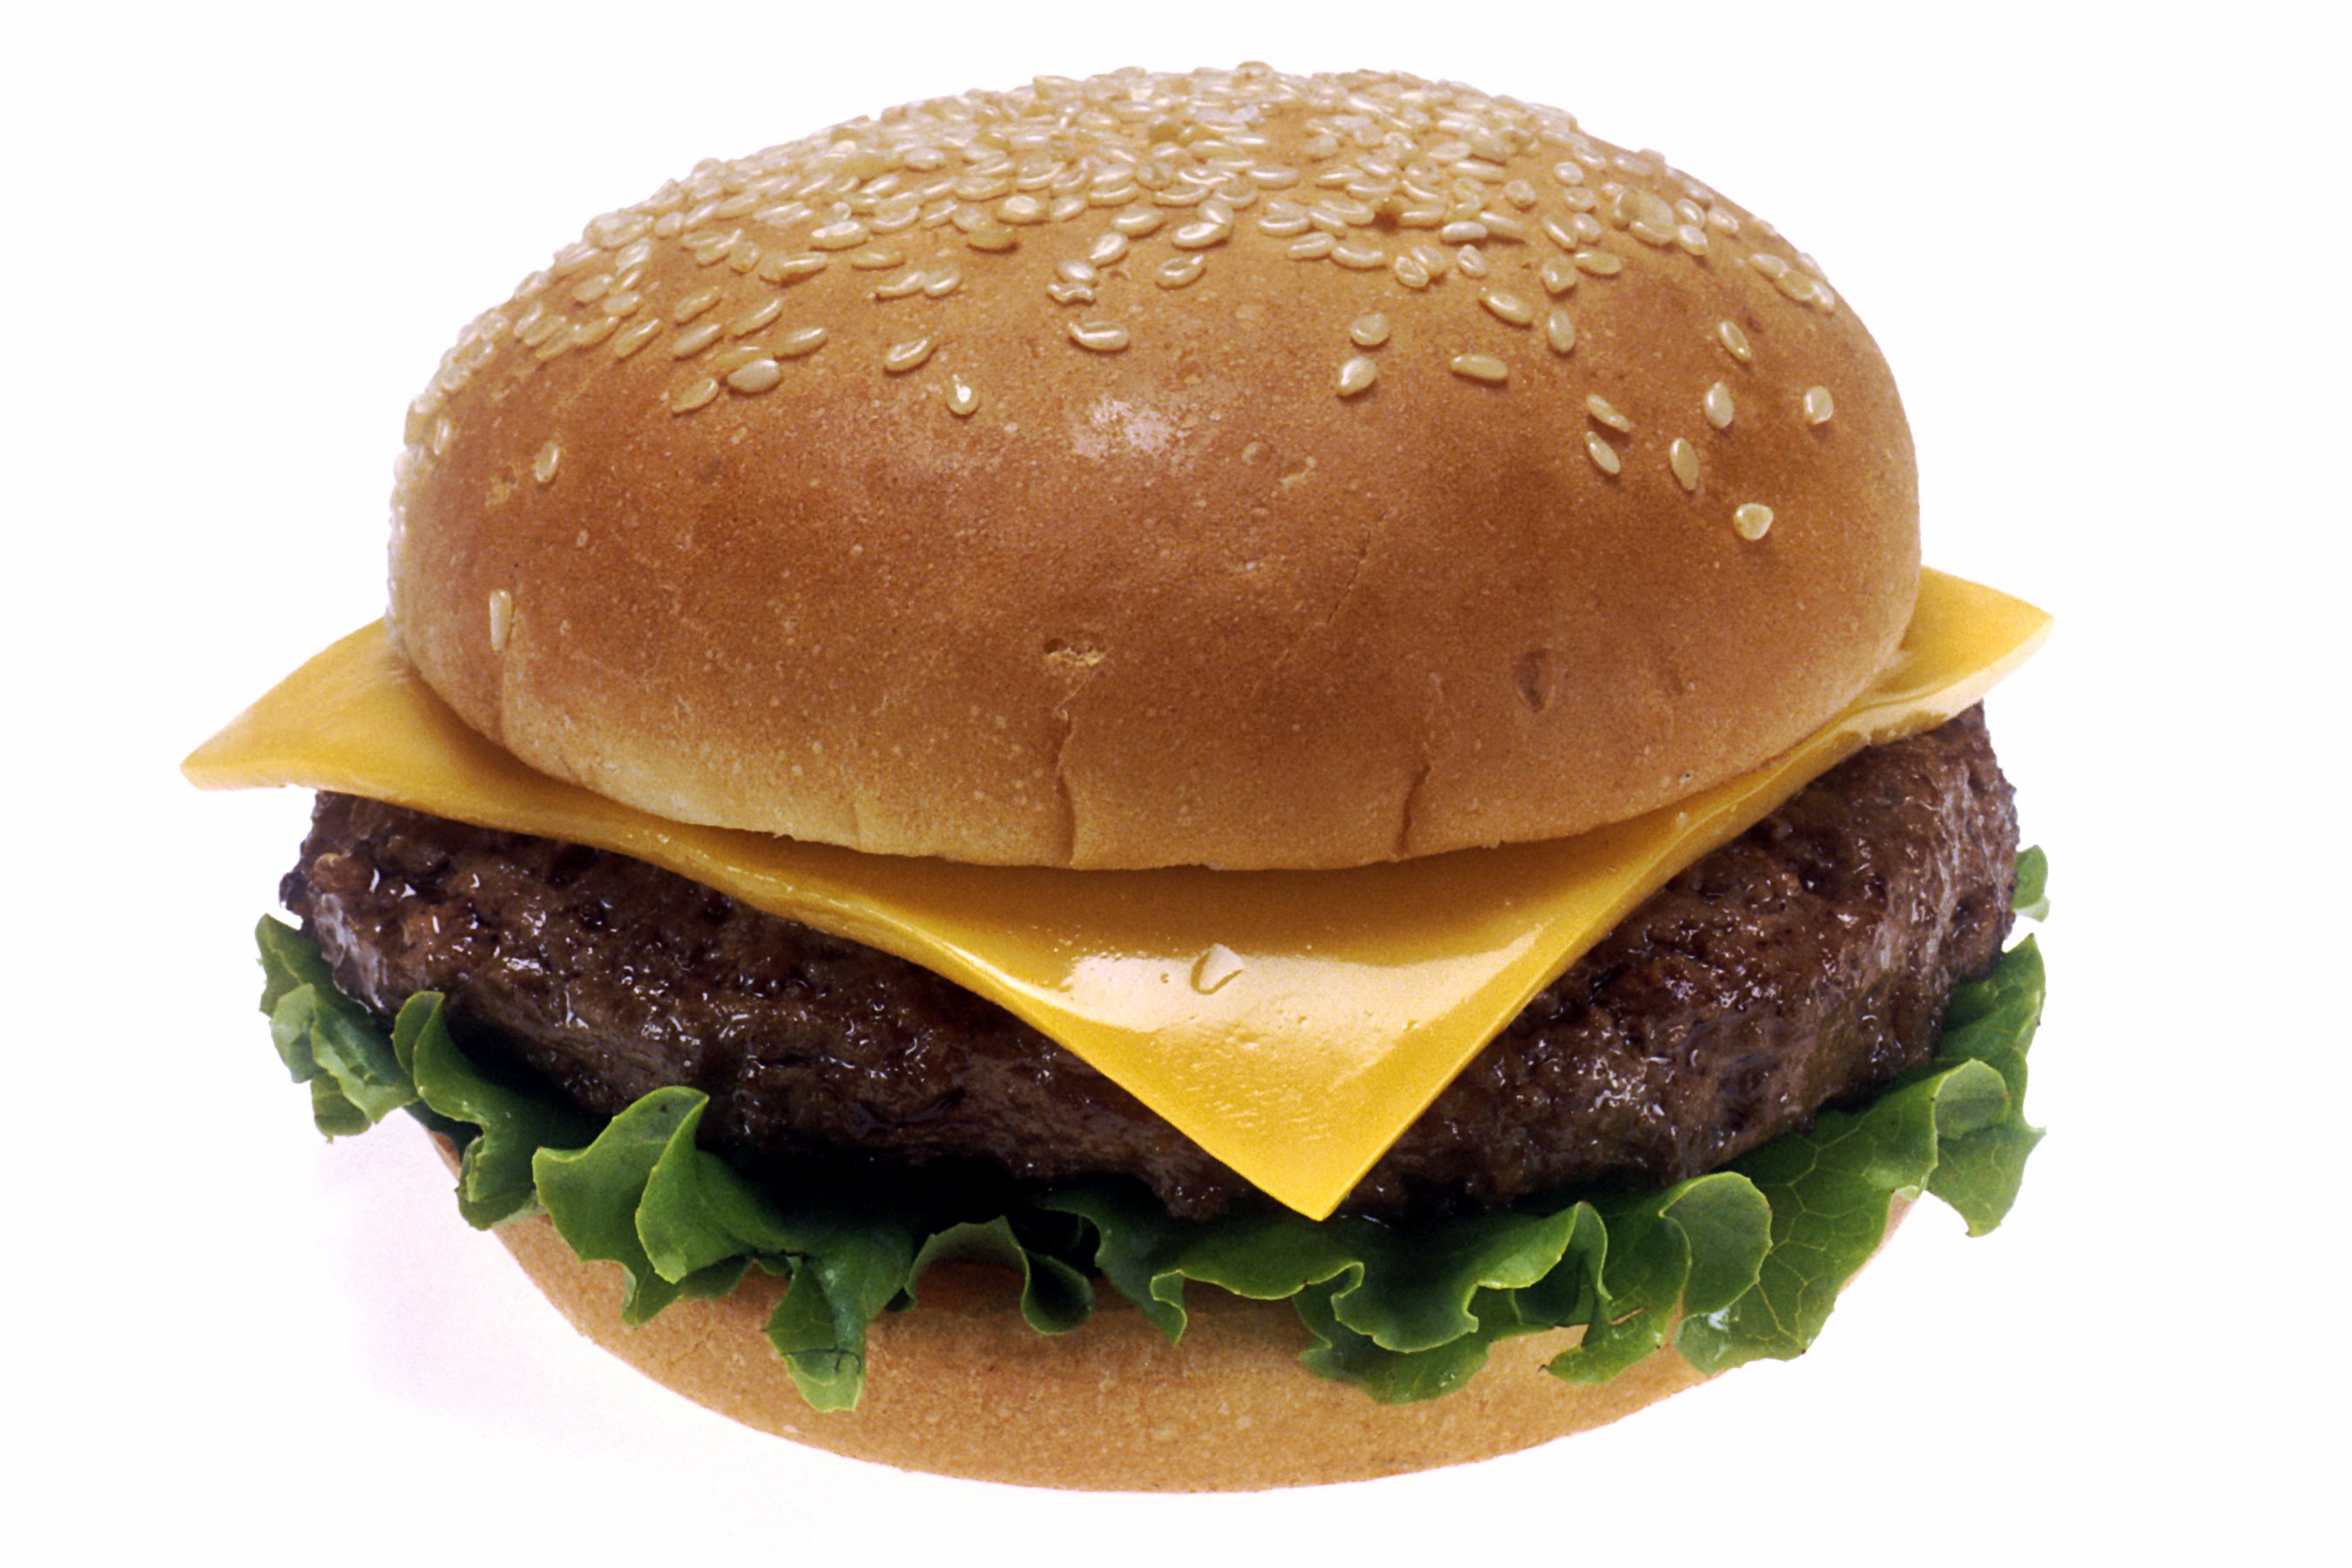 food, cheese, hamburgers, cheeseburgers - desktop wallpaper